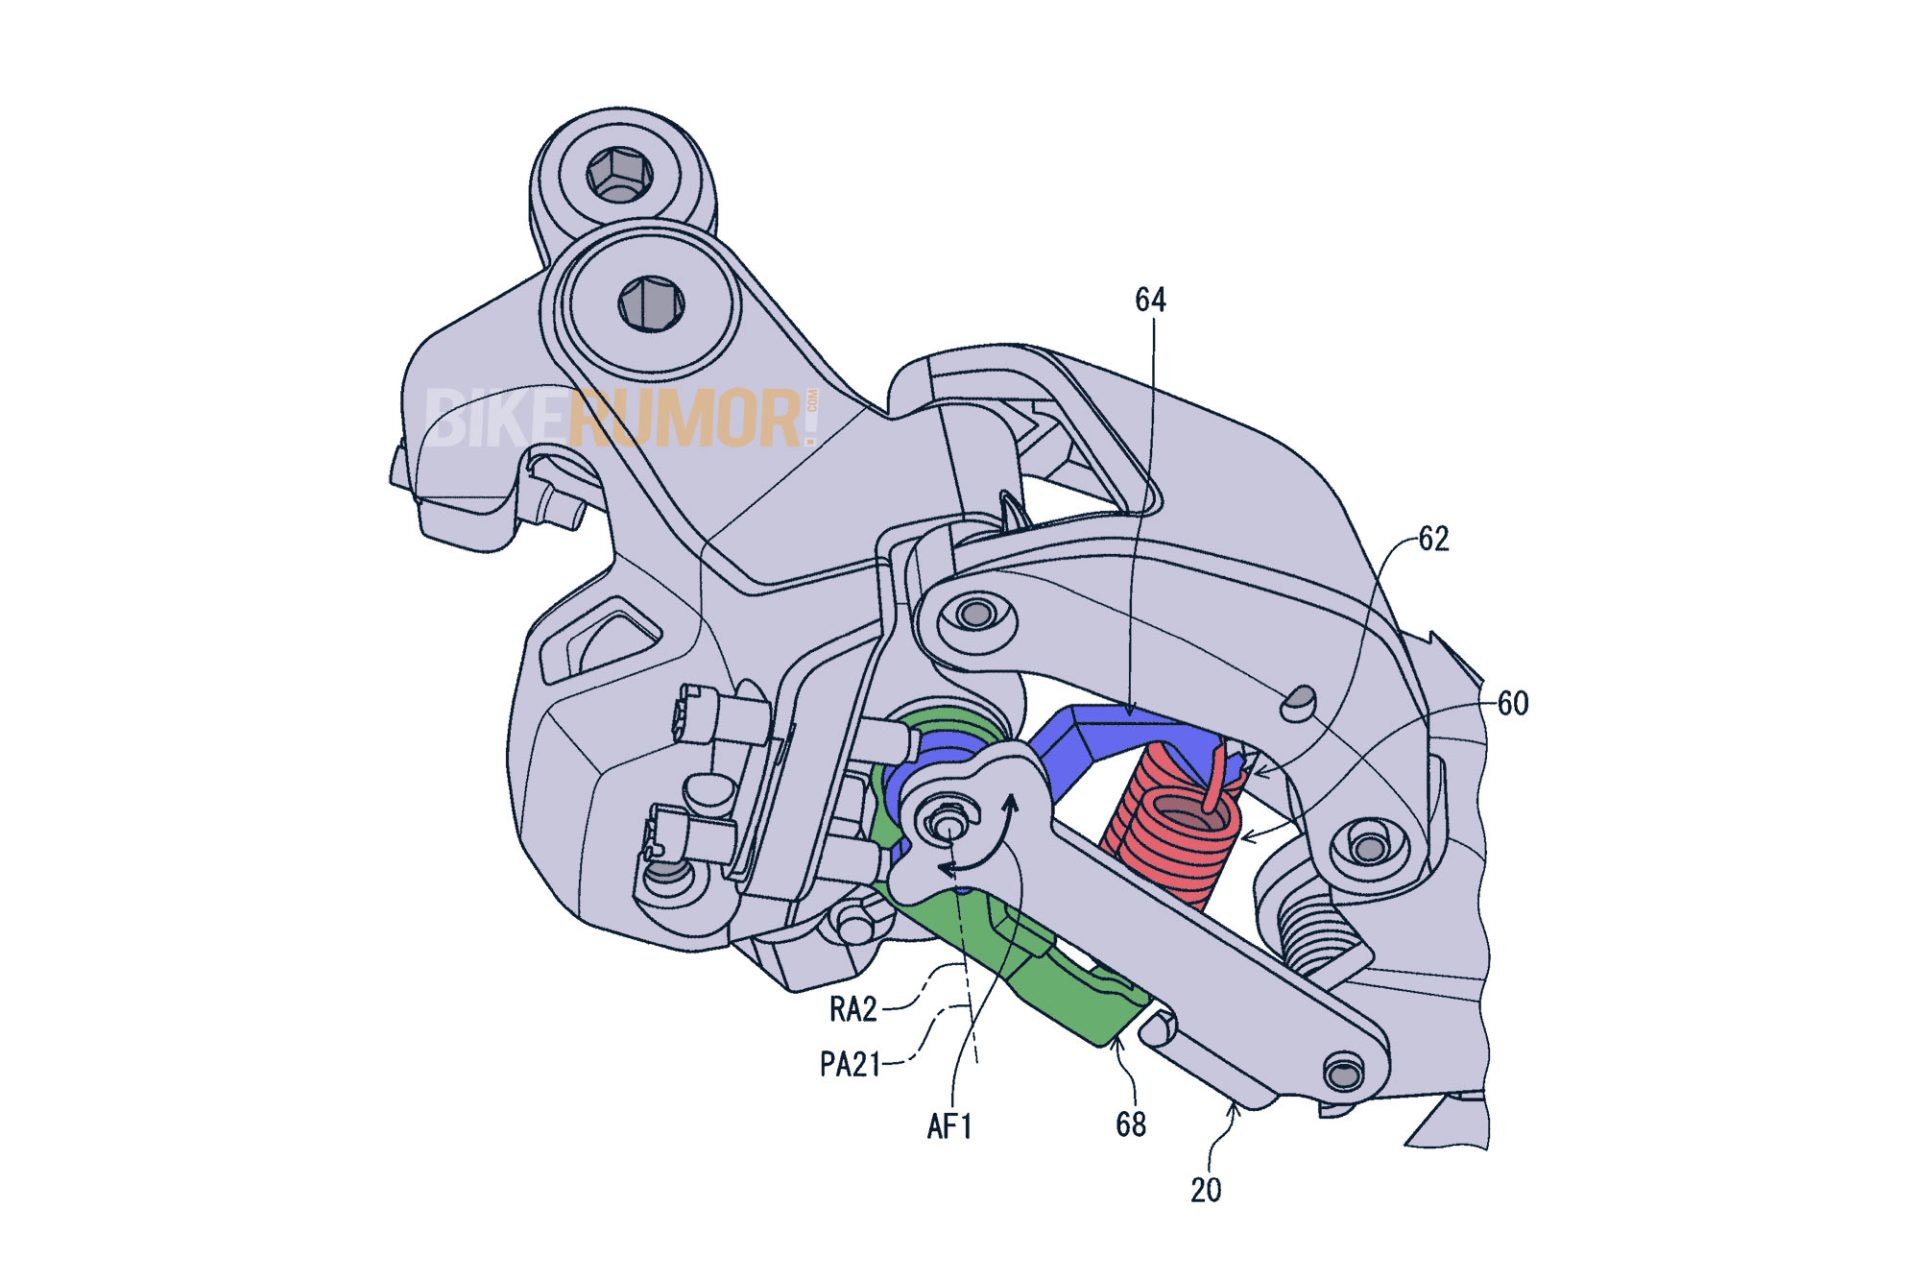 Shimano Di2 patent floating impact-resistant electronic-shift derailleur prototype concept diagram